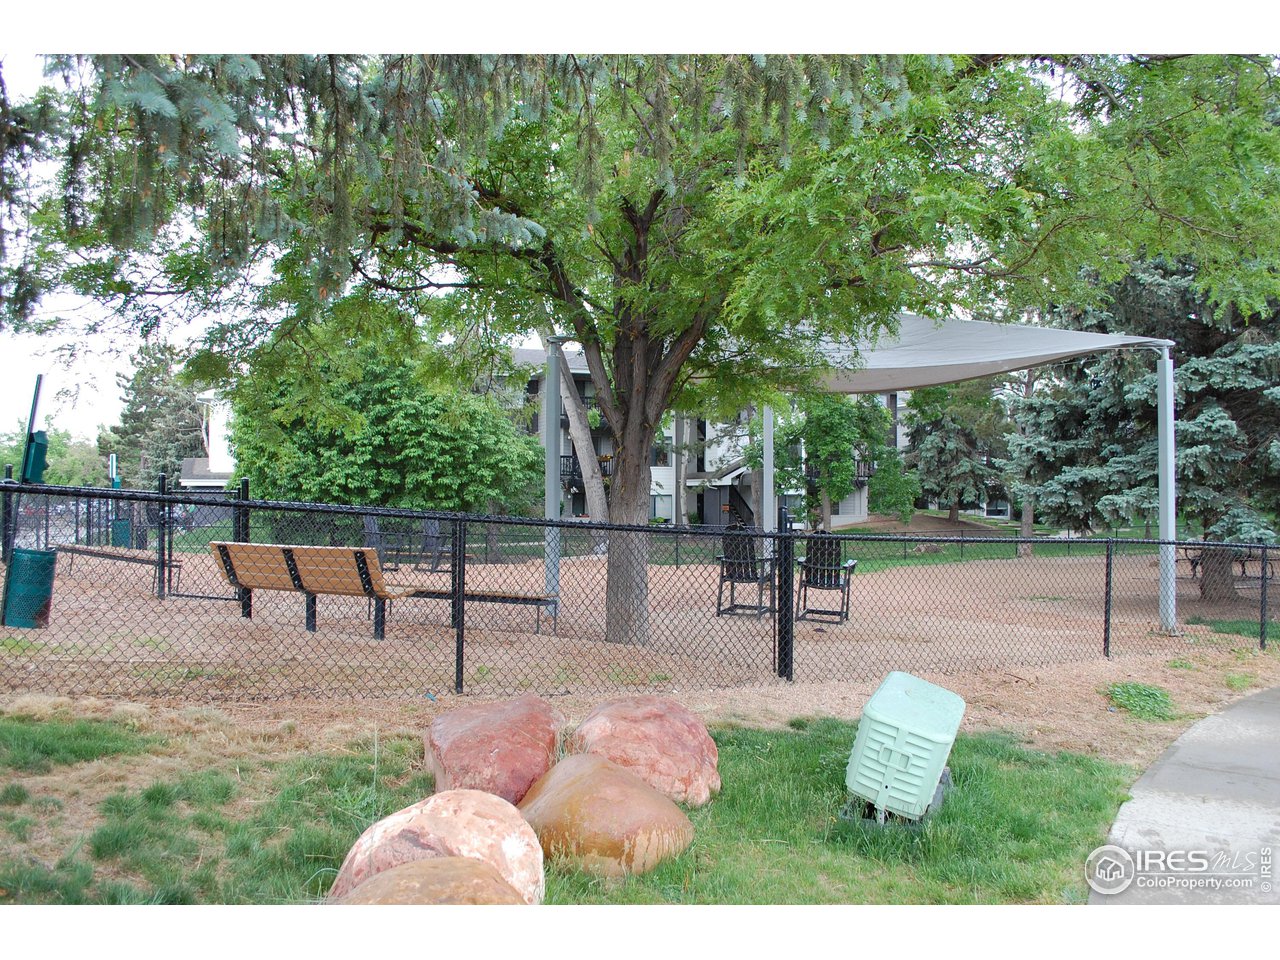 Community dog park adjacent to Aspen Grove